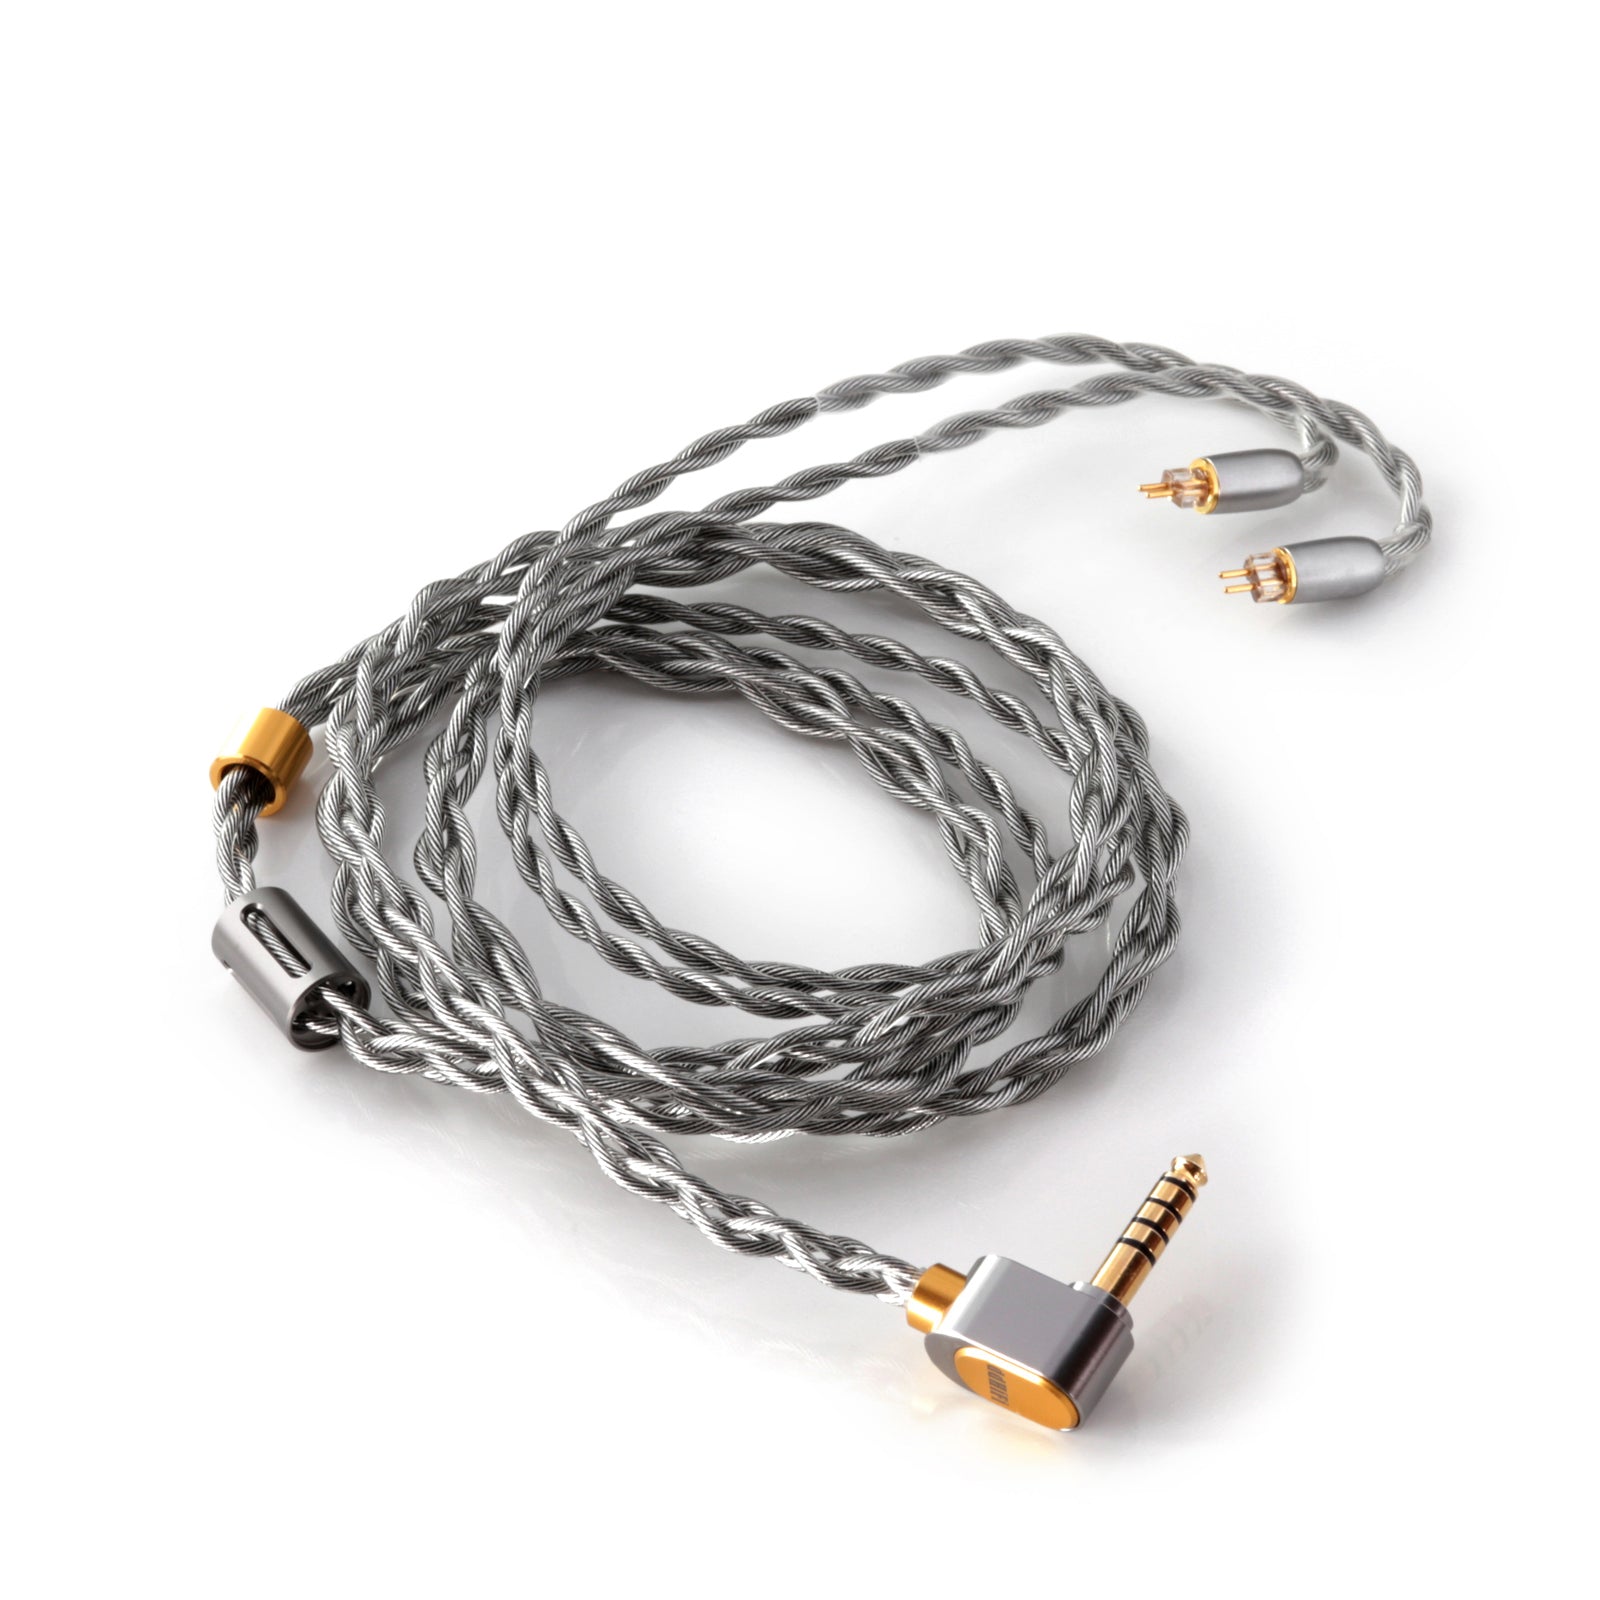 ddHiFi BC130A Air Nyx Earphone Cable